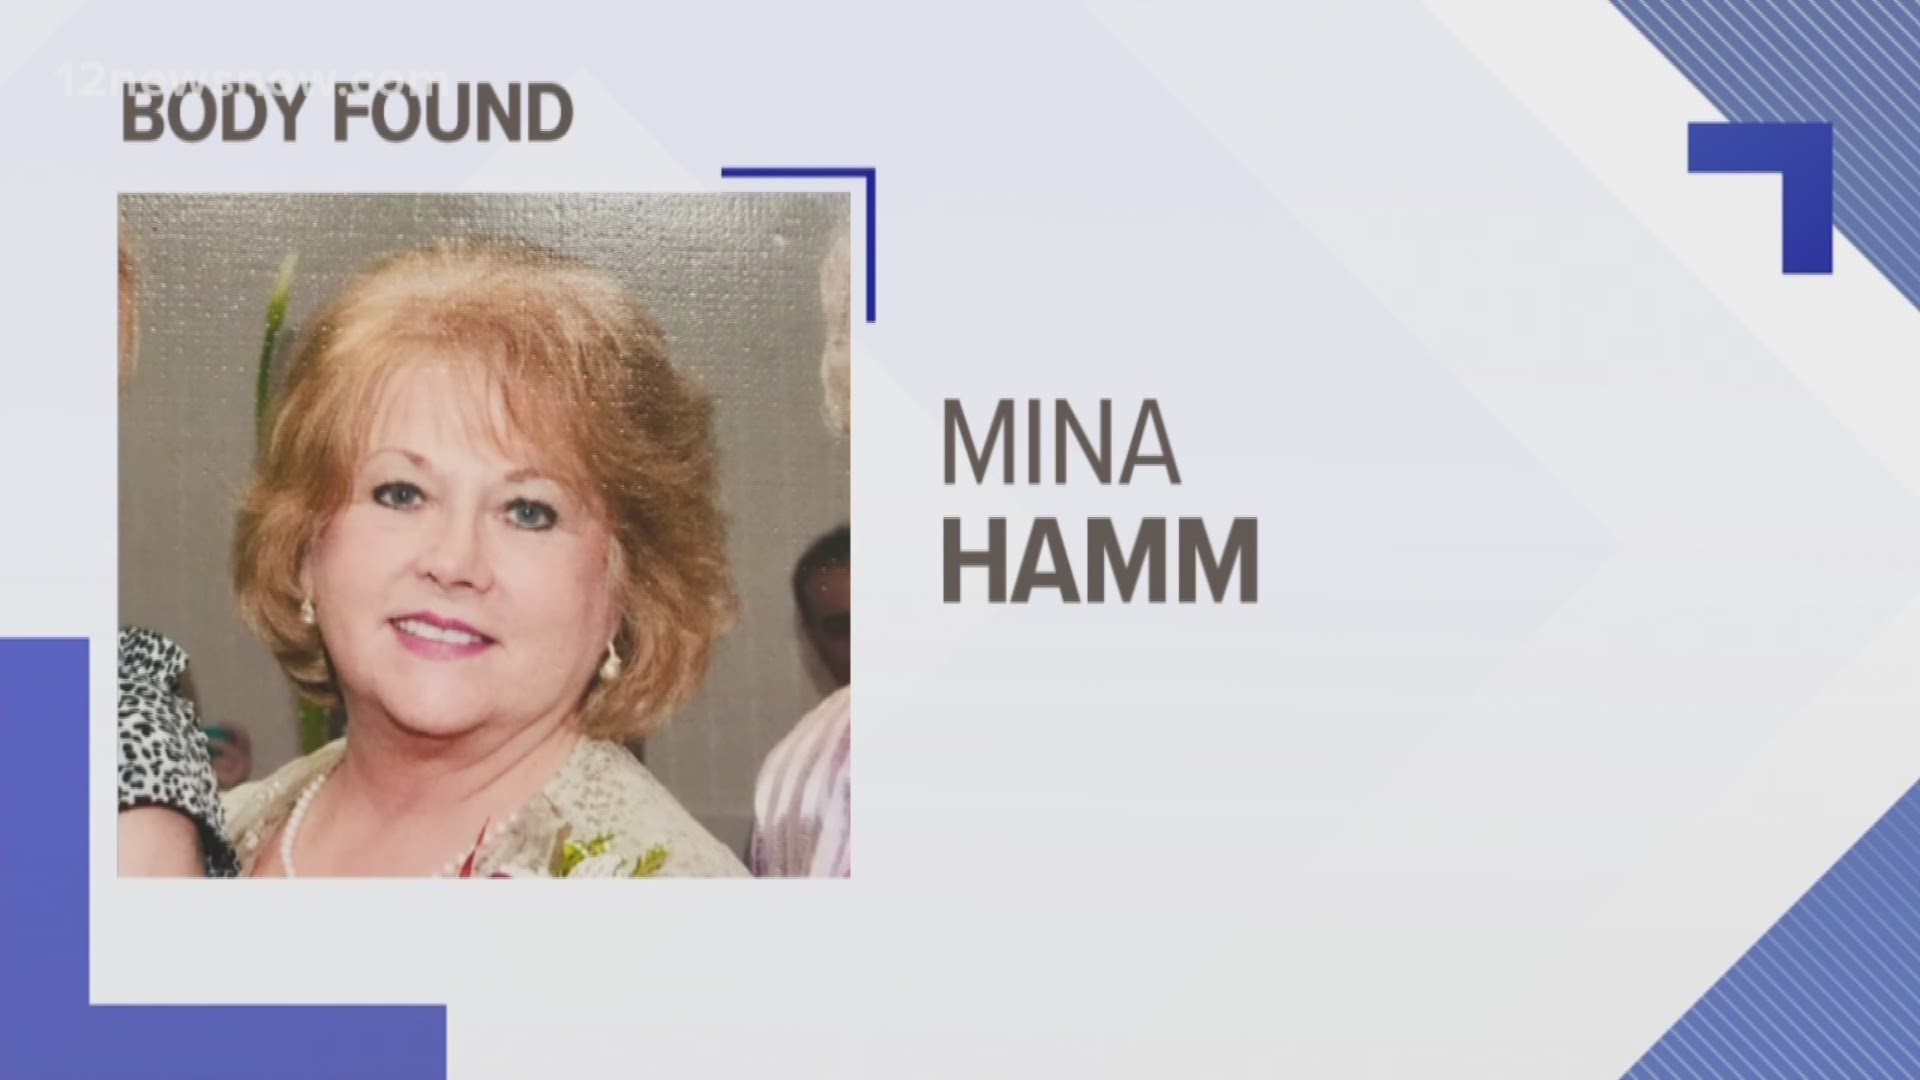 Mina Hamm was last seen at a CVS Wednesday